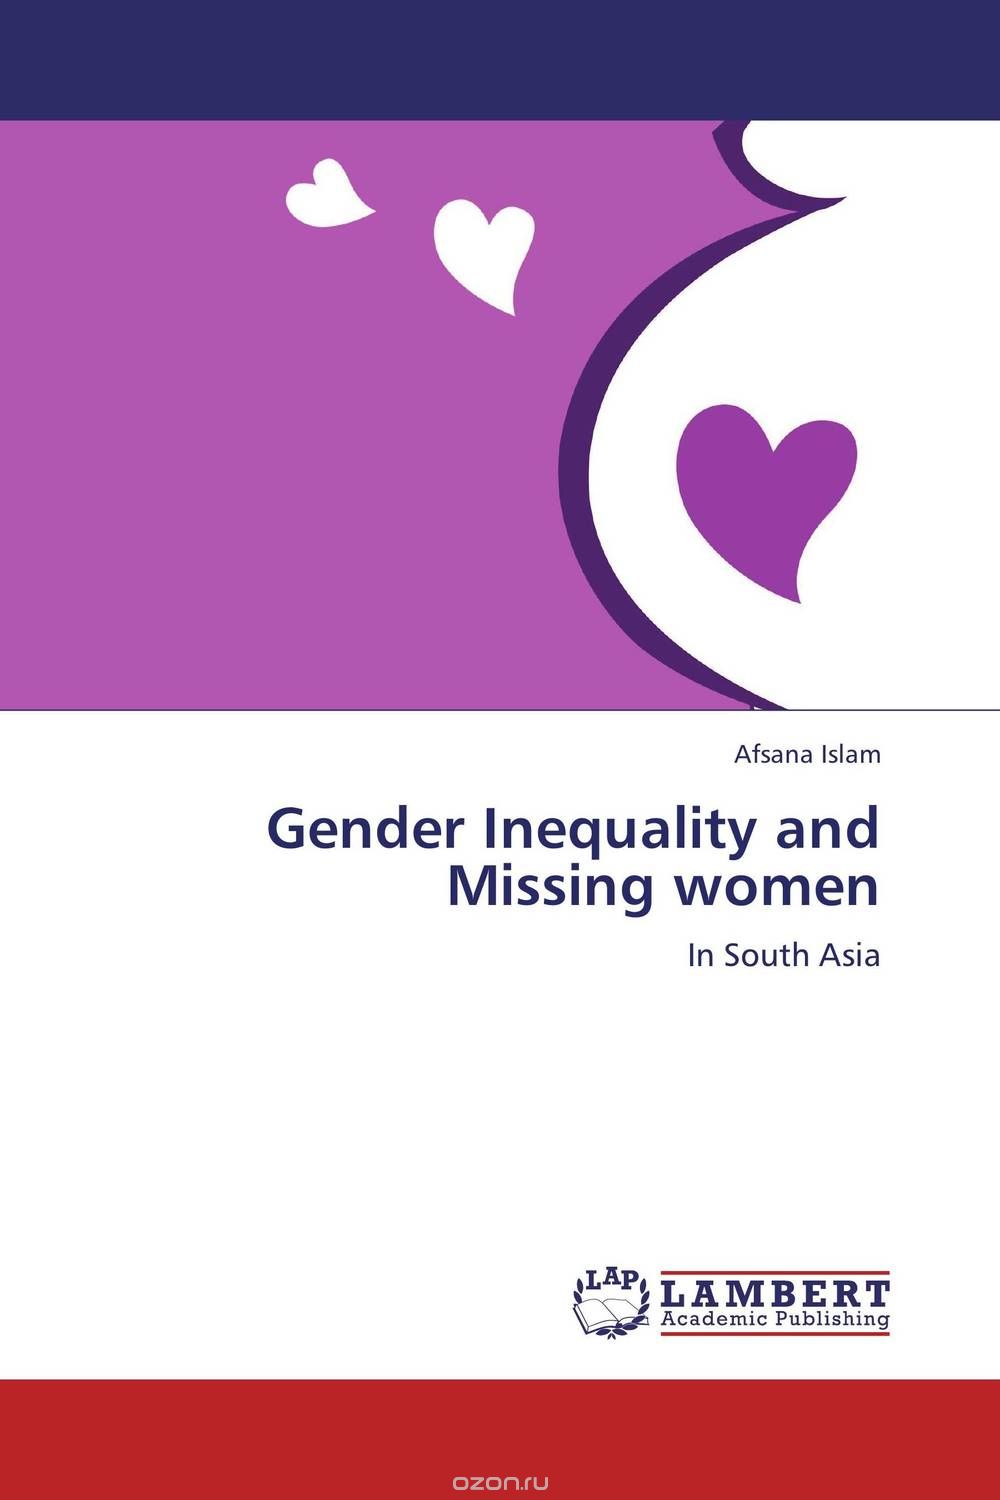 Скачать книгу "Gender Inequality and Missing women"